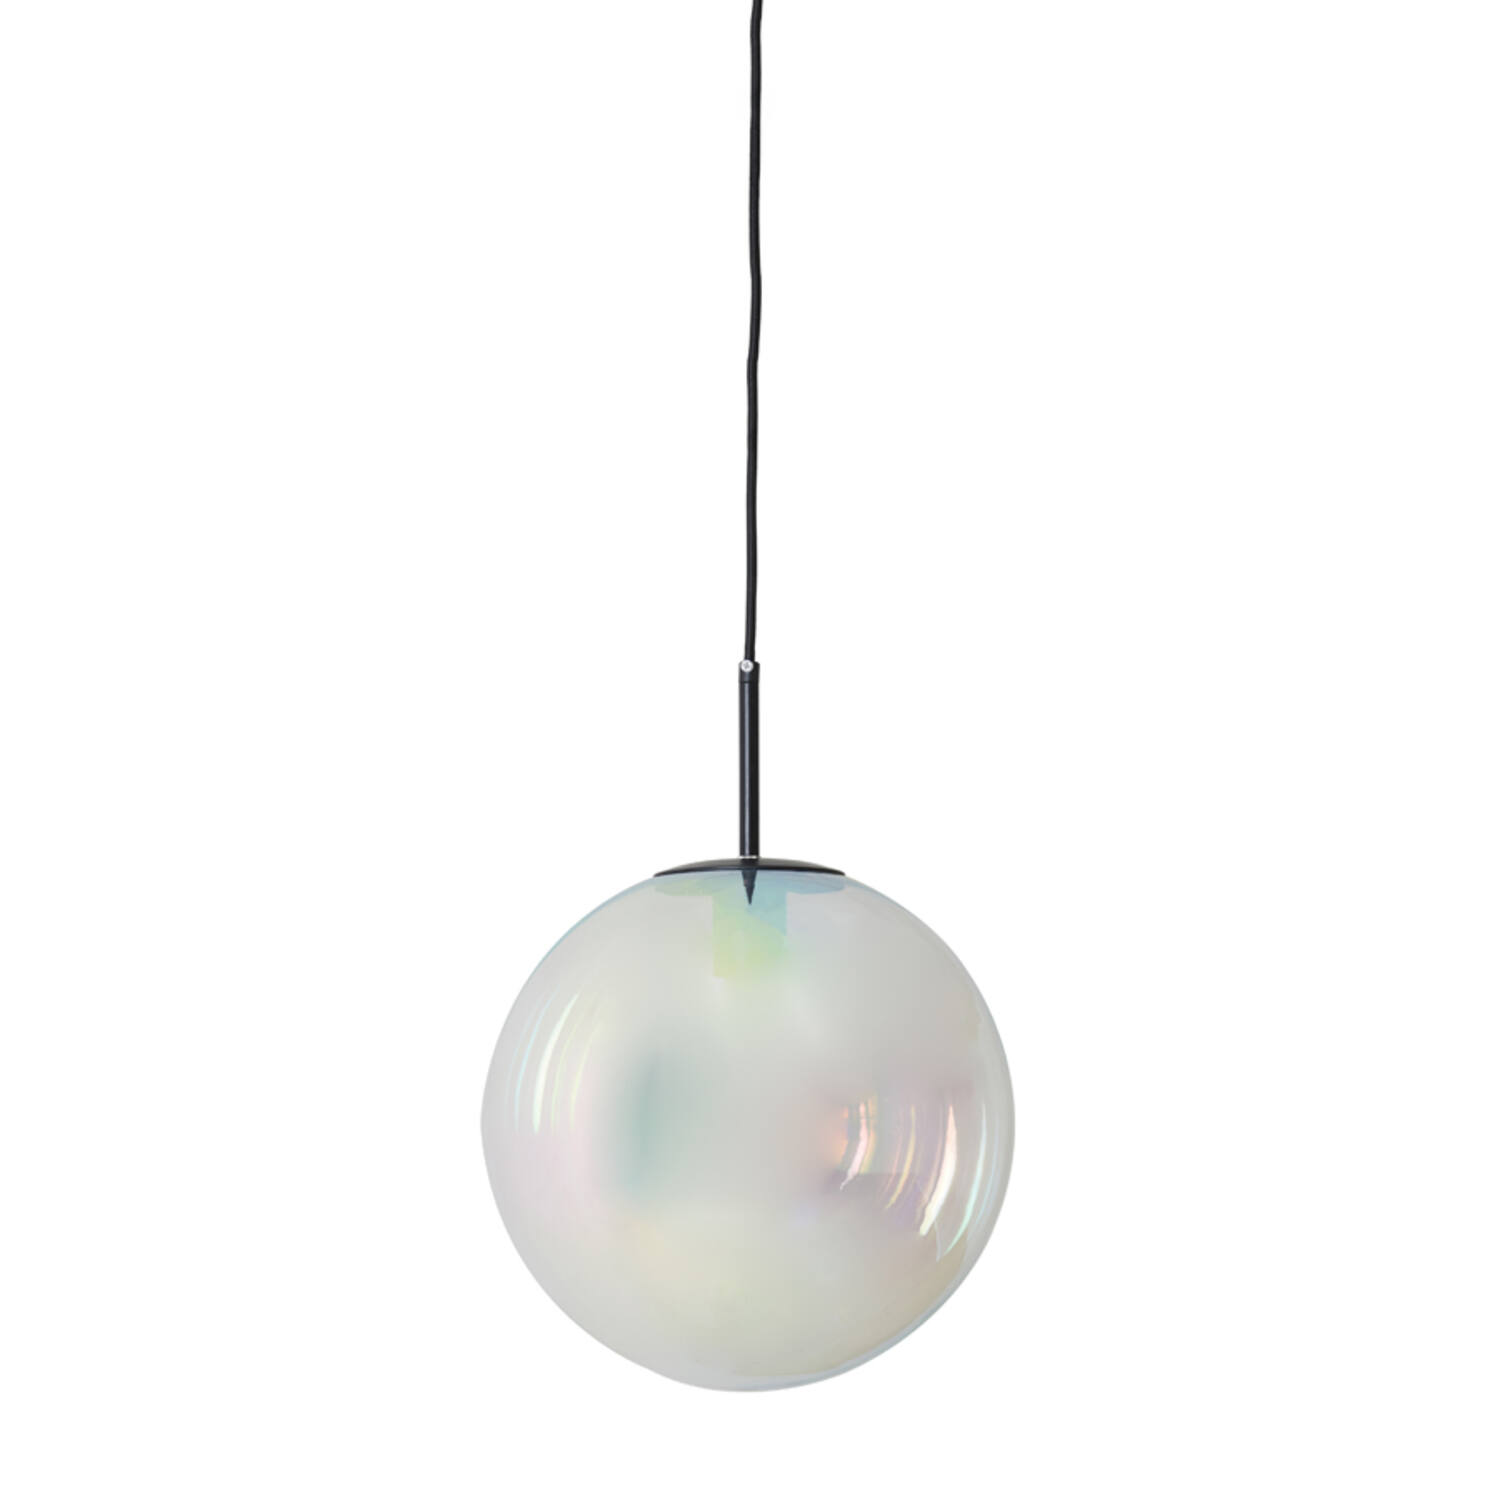 Hanglamp Medina - Glas Rainbow+zwart Light & Living Hanglamp 2957200